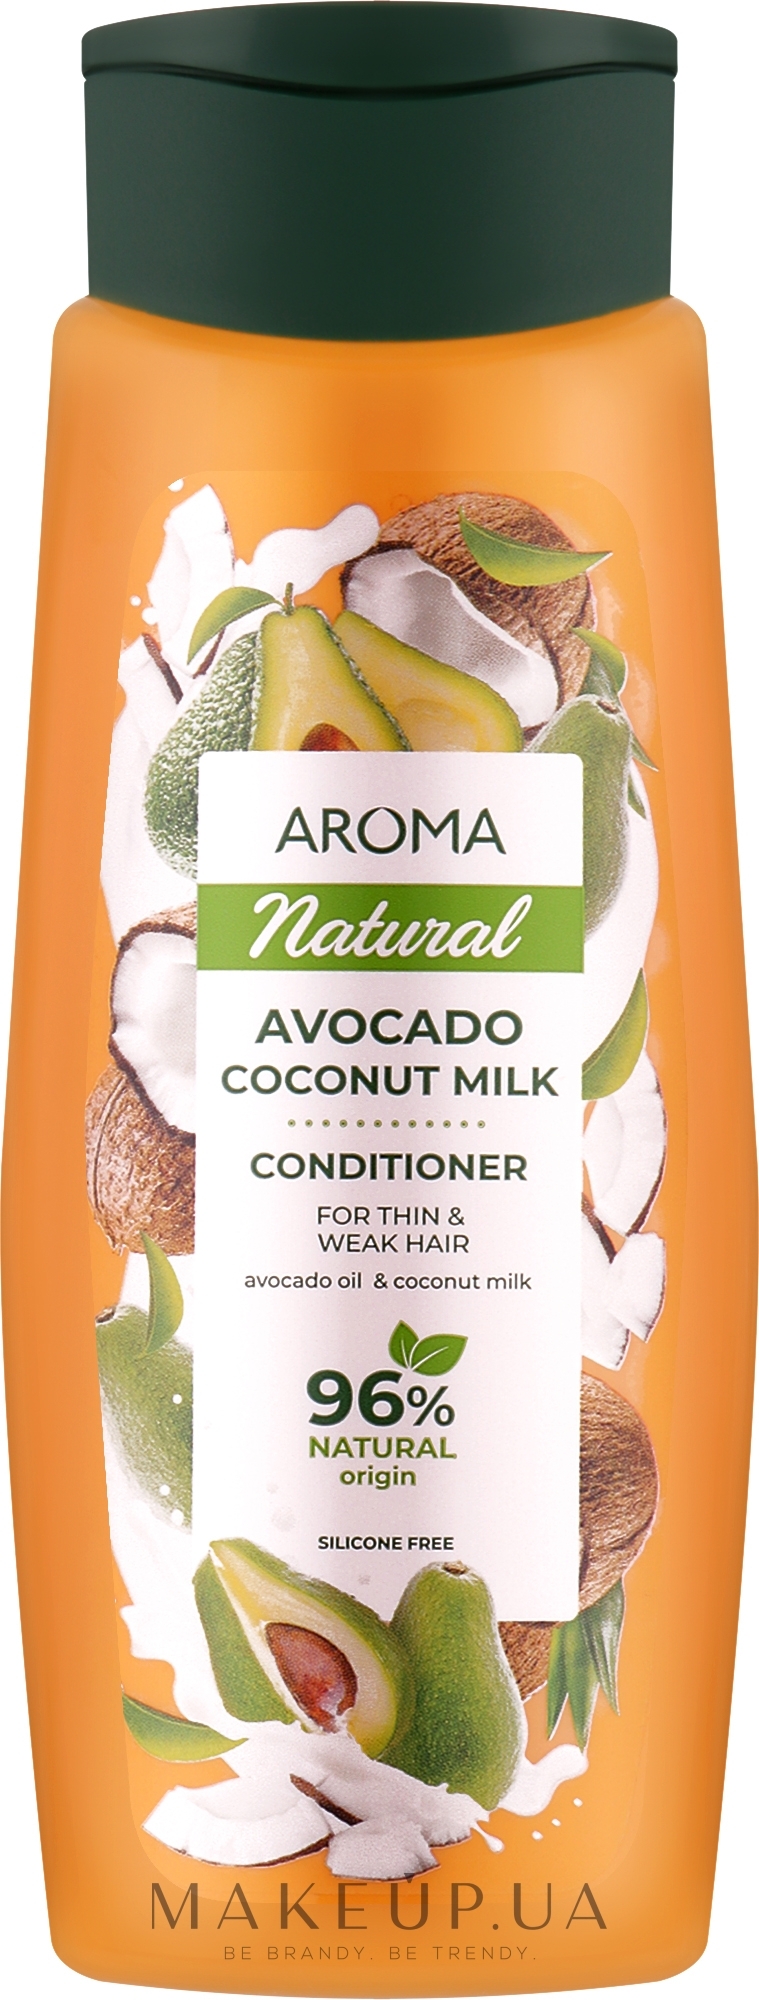 Кондиционер "Авокадо и кокосовое молоко" для тонких и слабых волос - Aroma Natural Conditioner,Avocado Coconut Milk For Thin & Weak Hair — фото 400ml